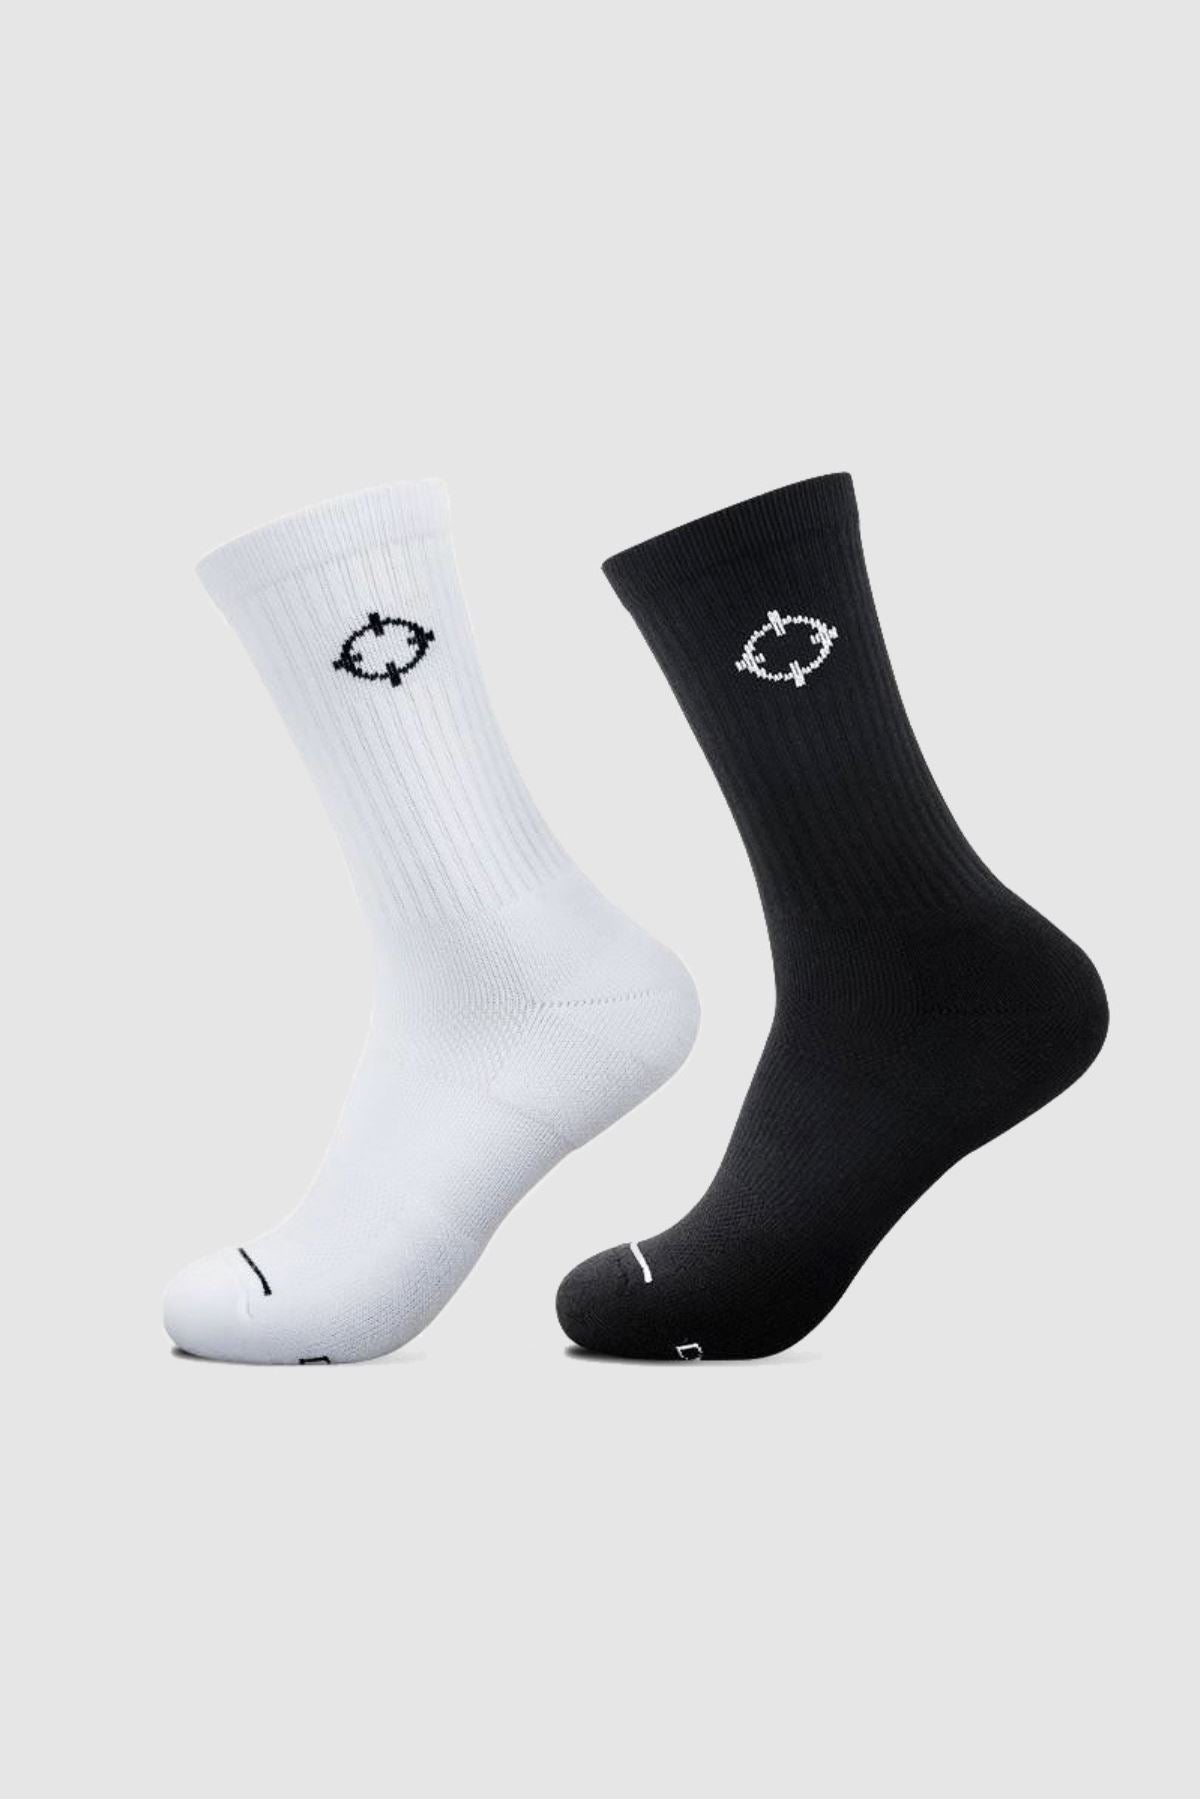 Crew Socks - Bundles of 2/3 [S322] Rigorer Black & White L ( EU 40-45 ) Pack of 2 Pairs (1 Black & 1 White)